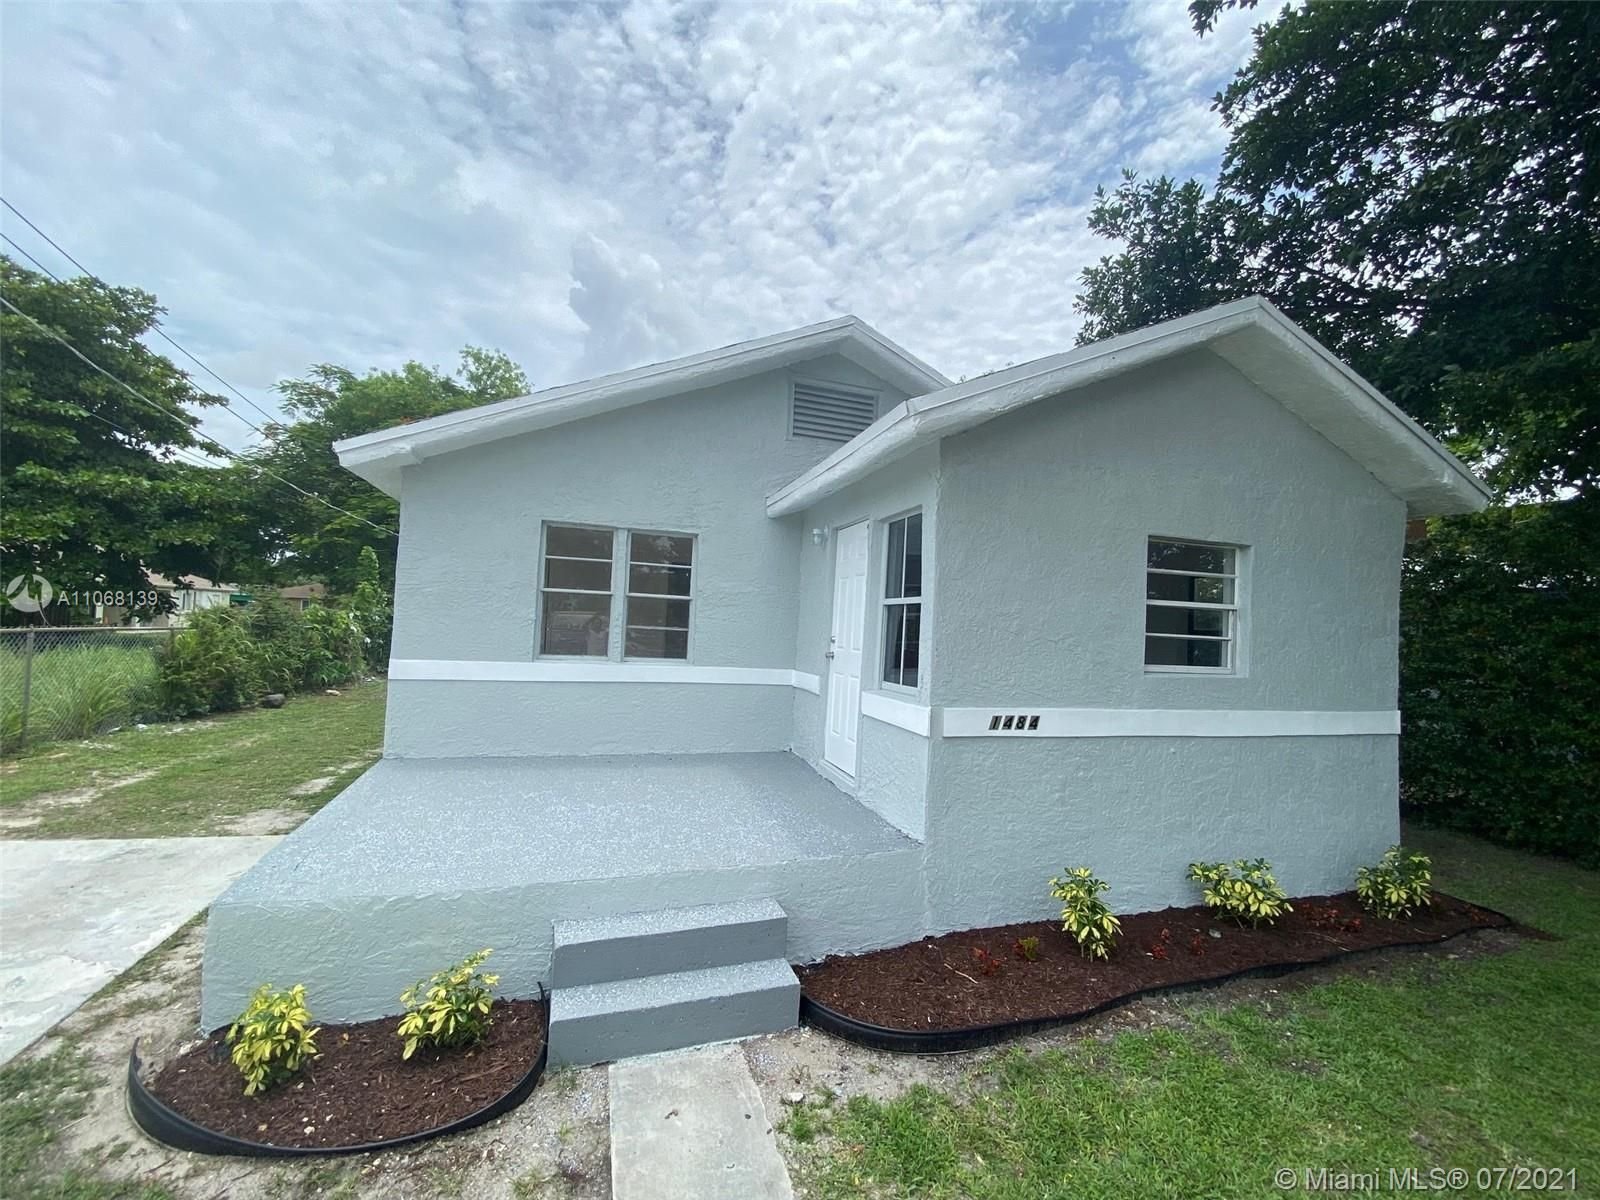 Real estate property located at 1484 60th St, Miami-Dade County, Miami, FL